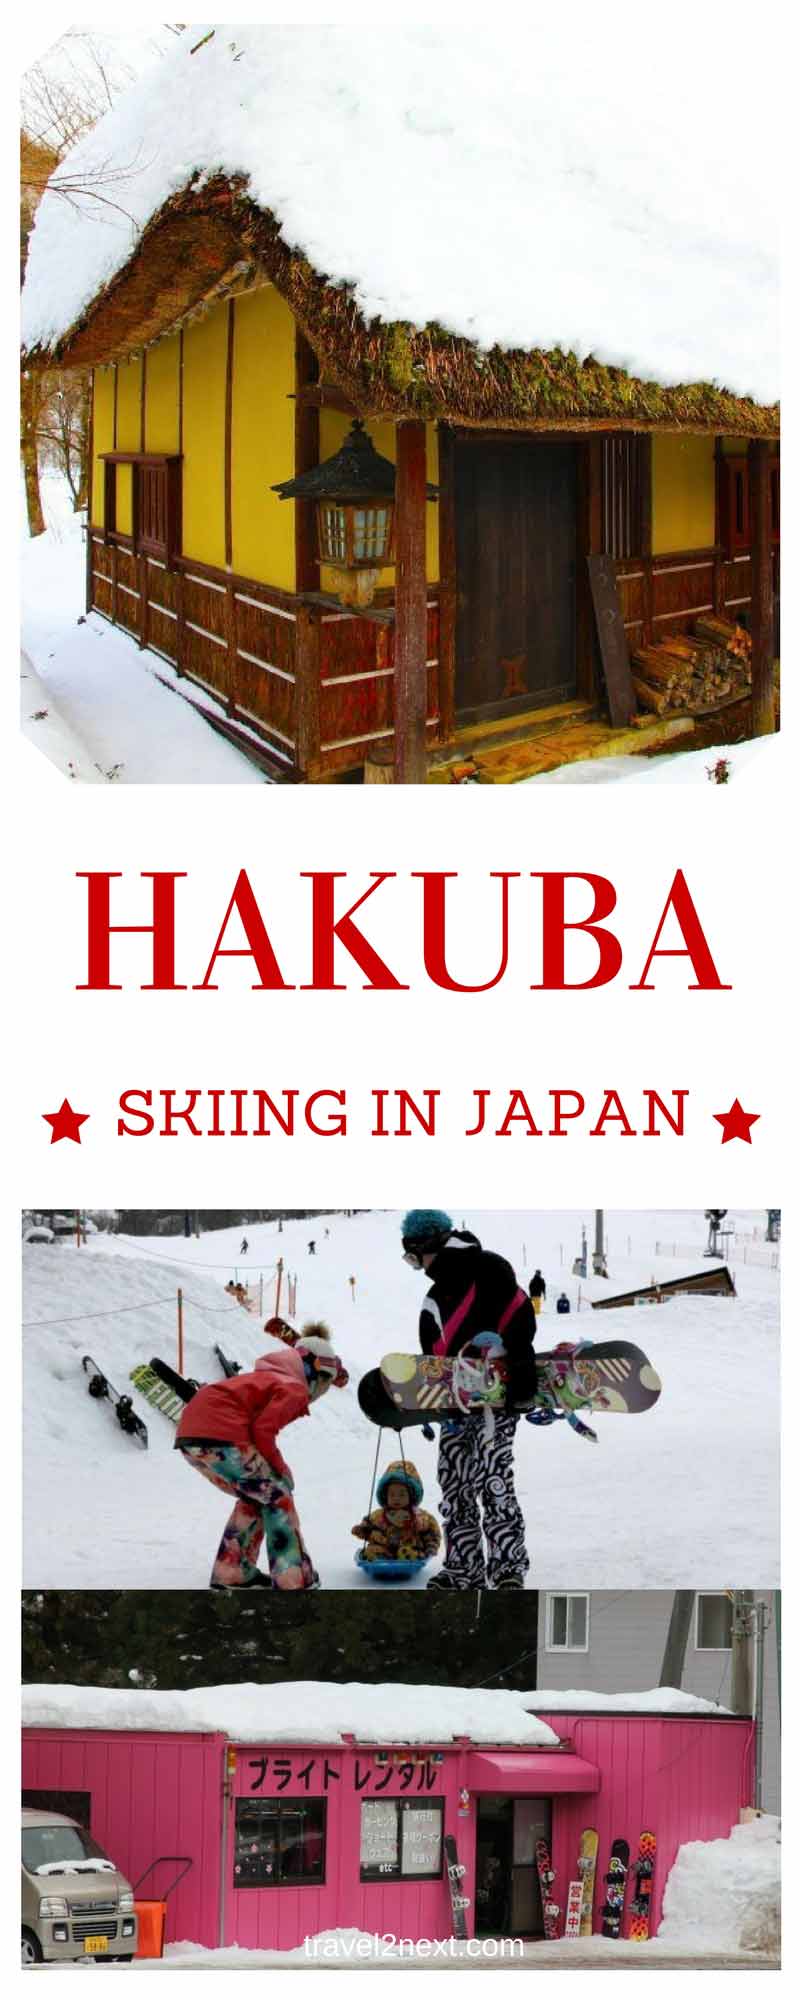 Skiing in Japan – Hakuba